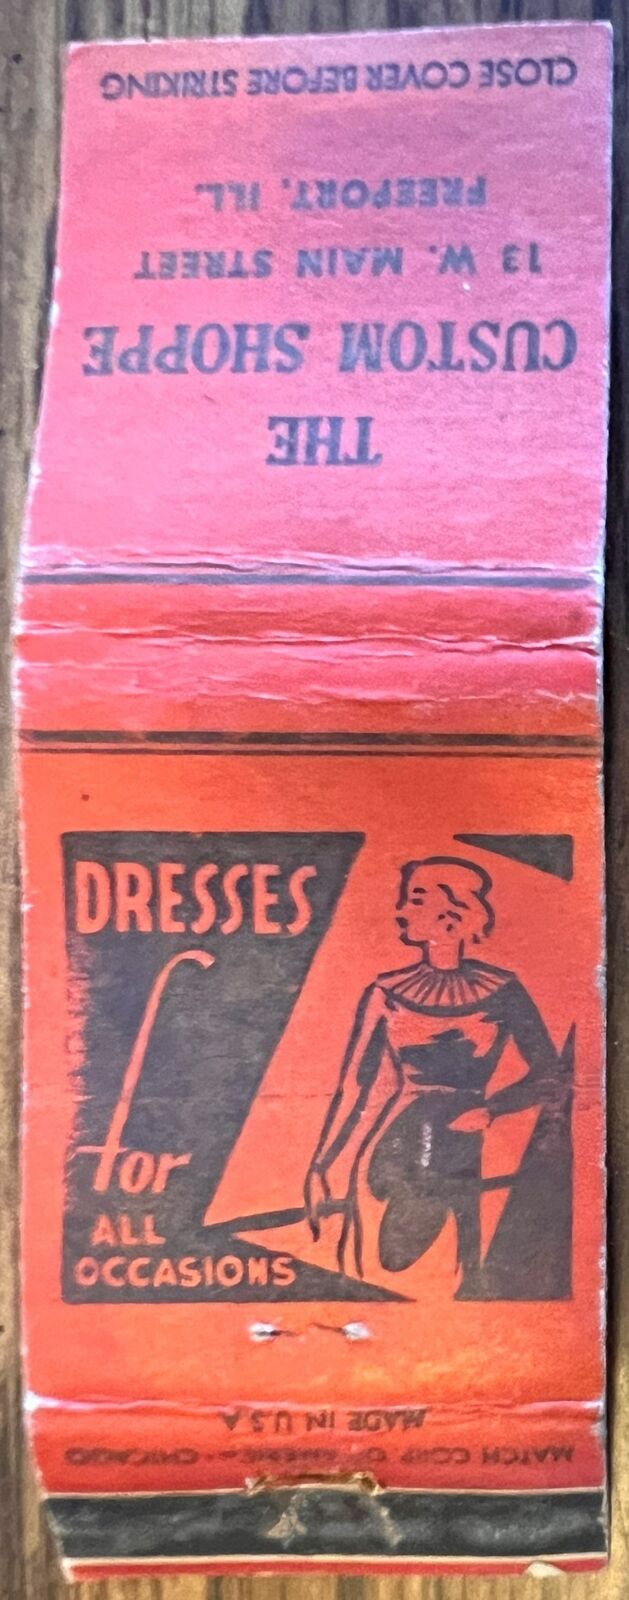 The Custom Shoppe Freeport IL Illinois Dresses Furs Vintage Matchbook Cover